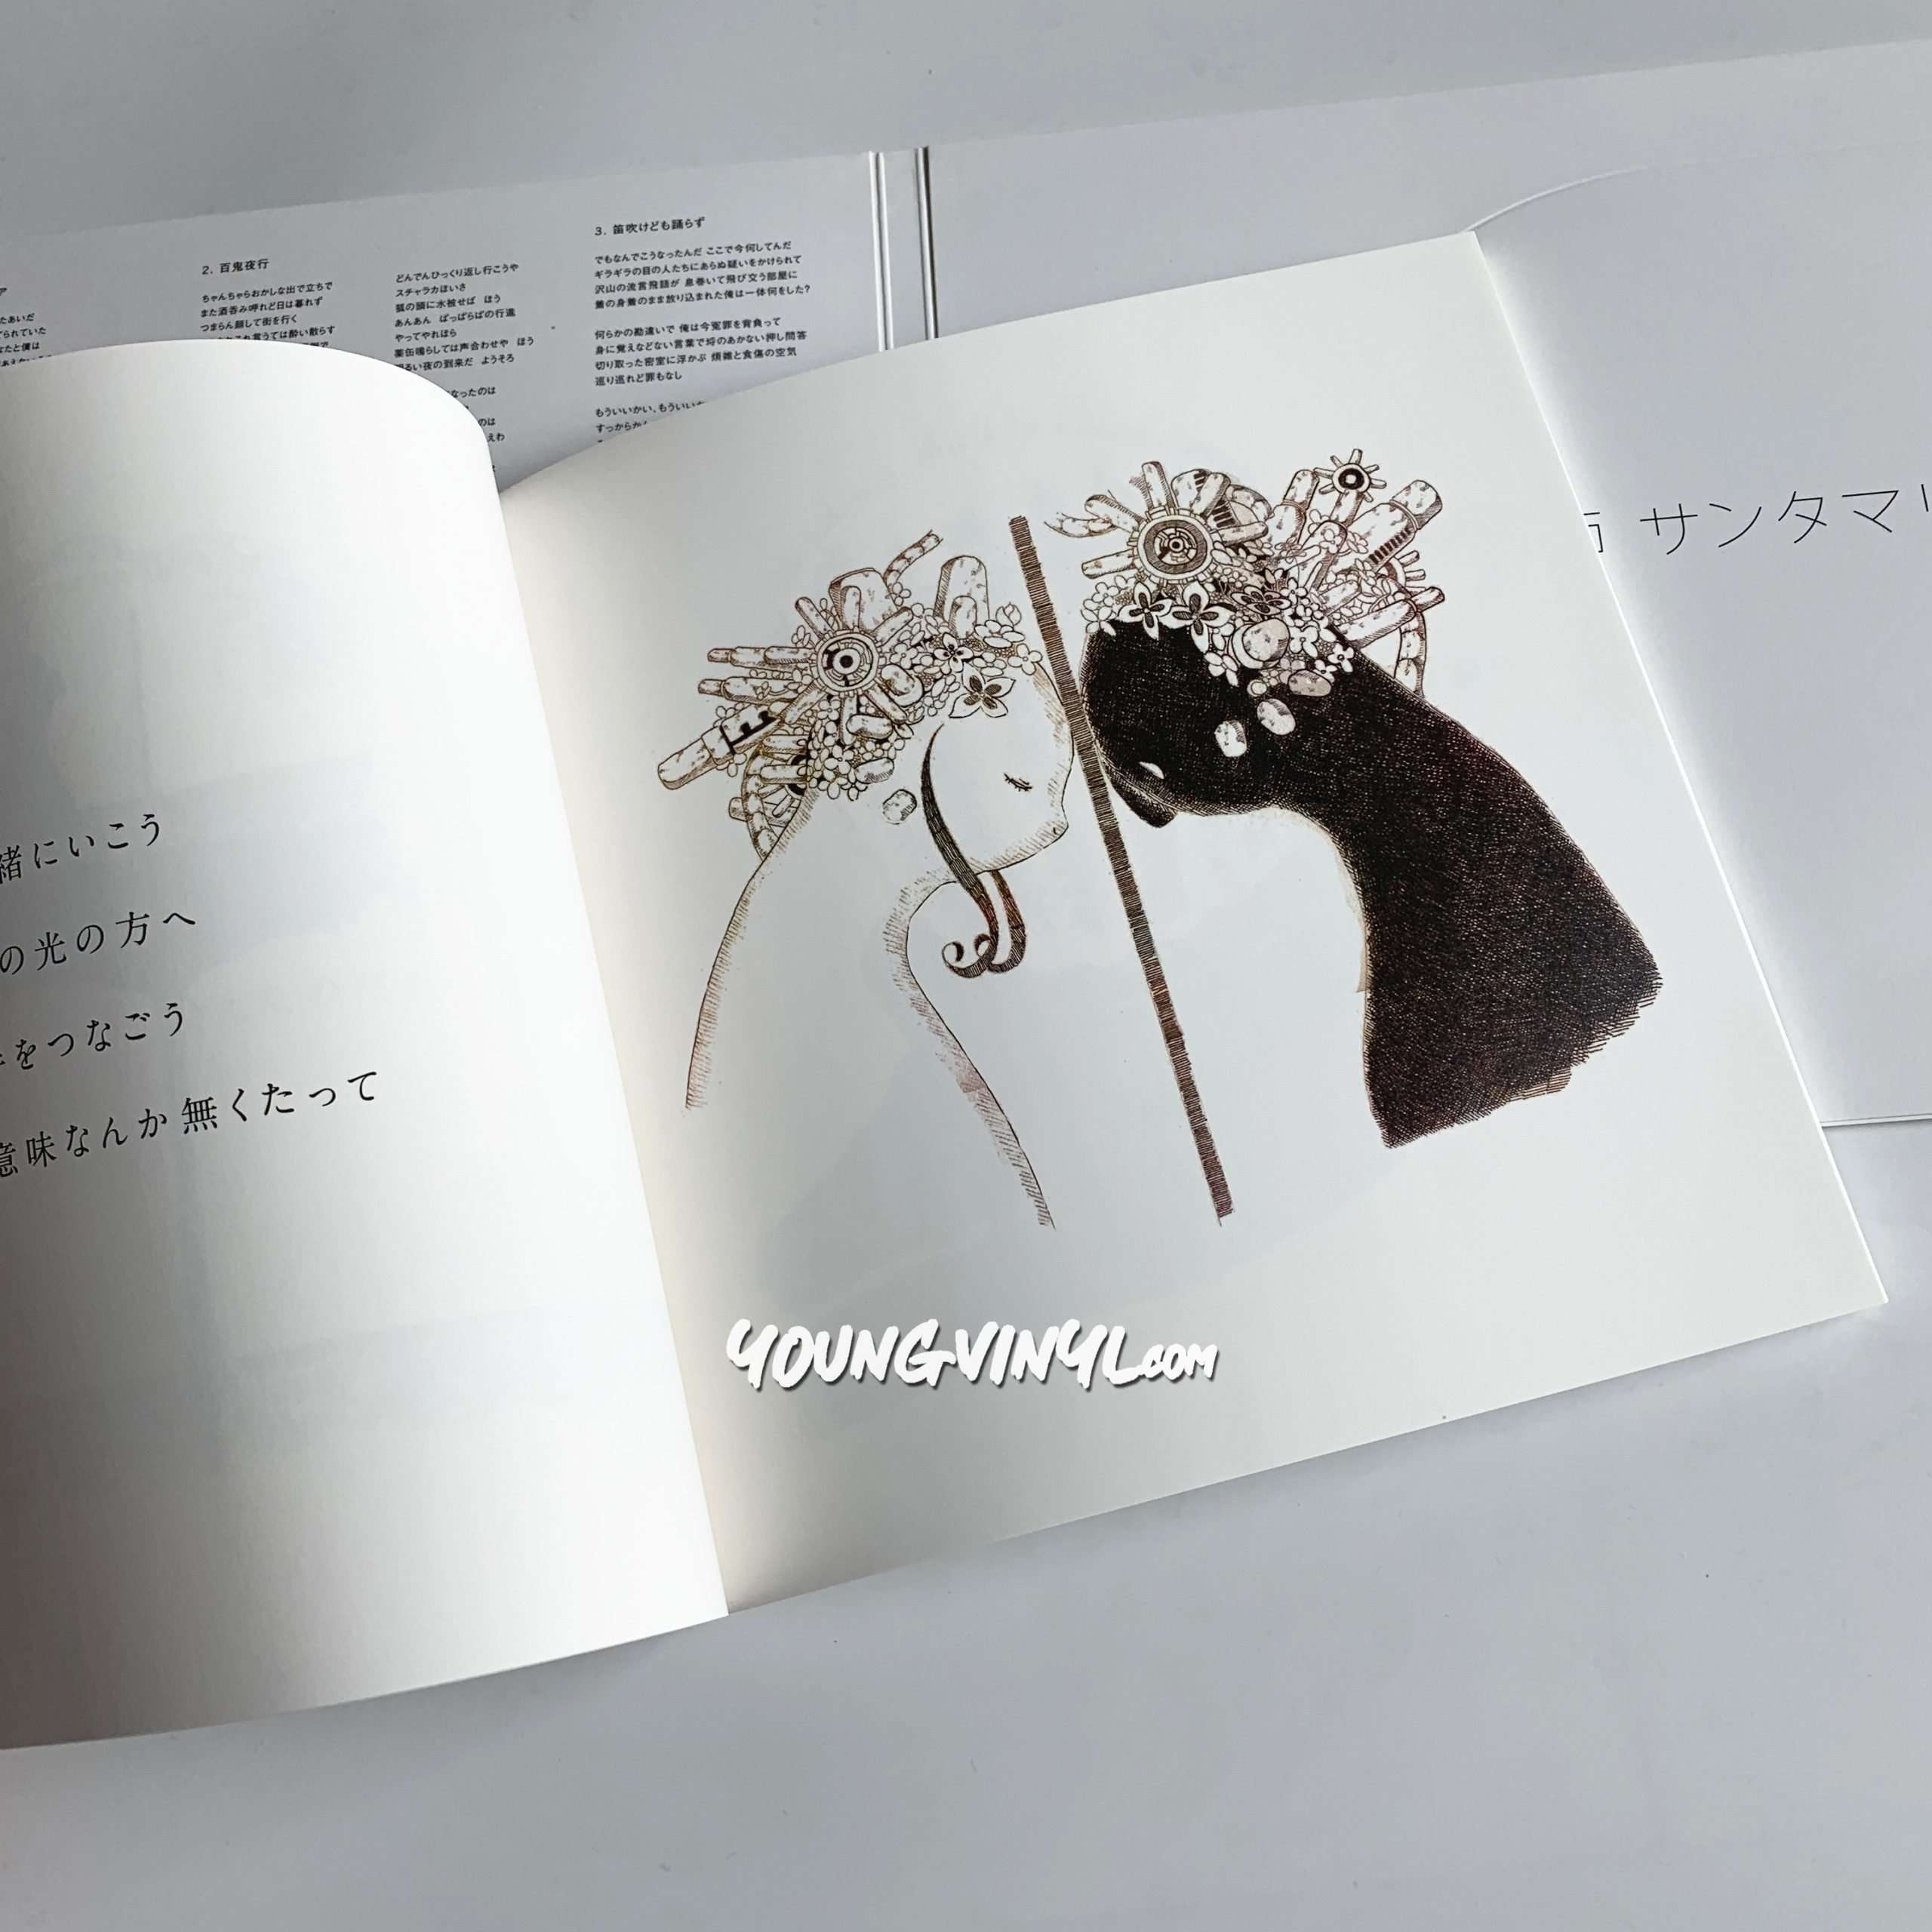 Kenshi Yonezu サンタマリア CD Limited Edition 米津玄師 - Young Vinyl